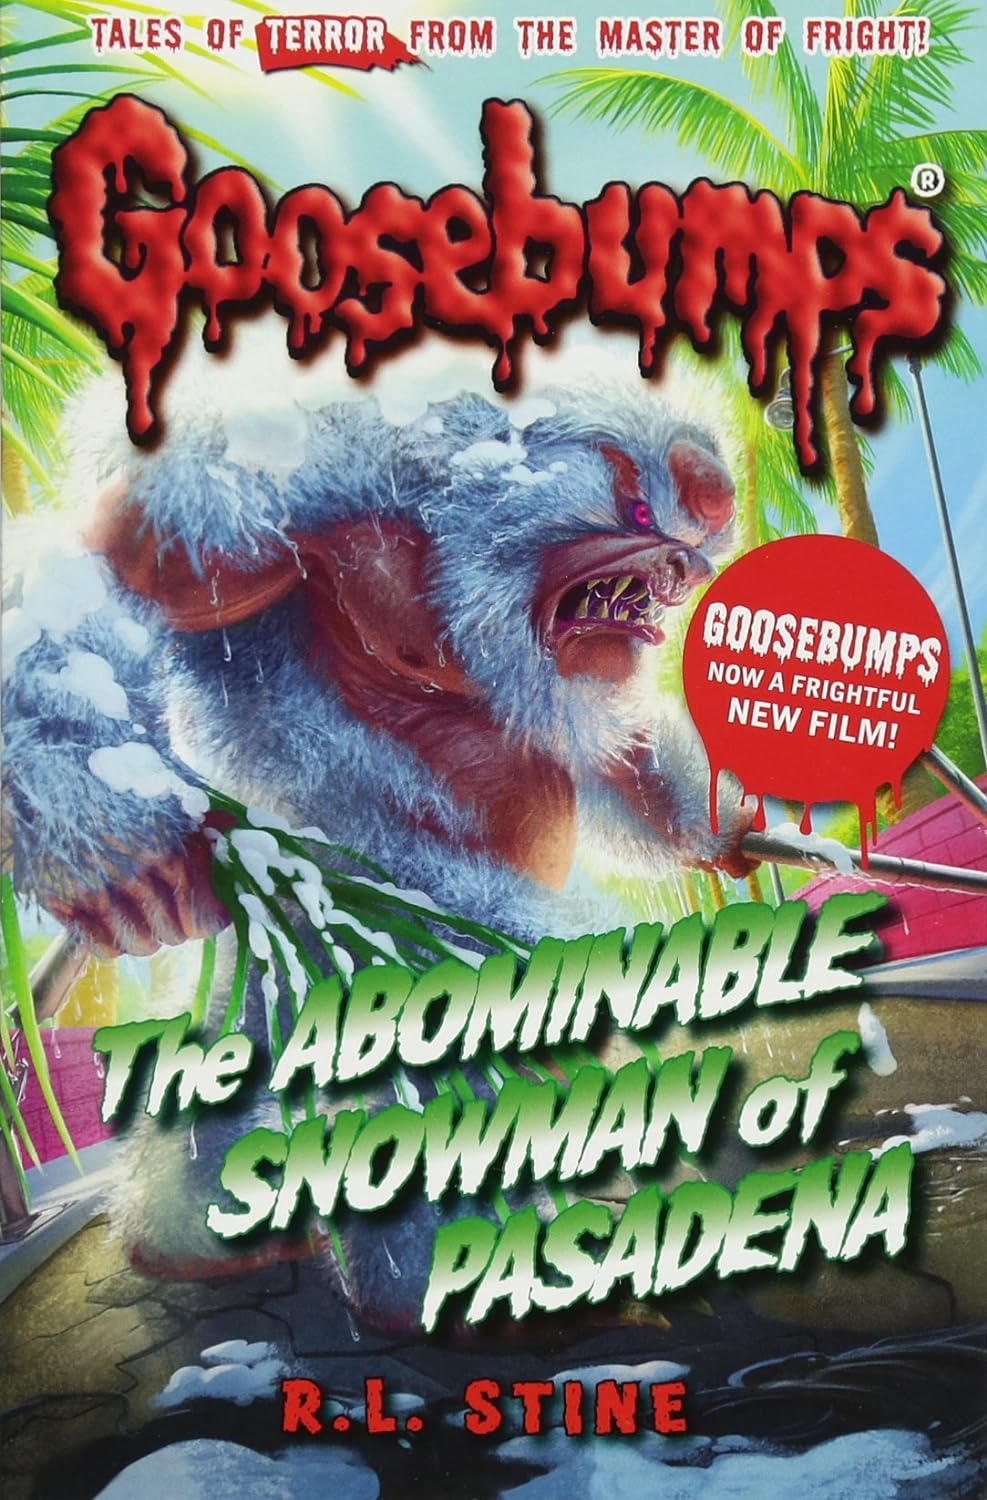 The Abominable Snowman of Pasadena (Goosebumps)